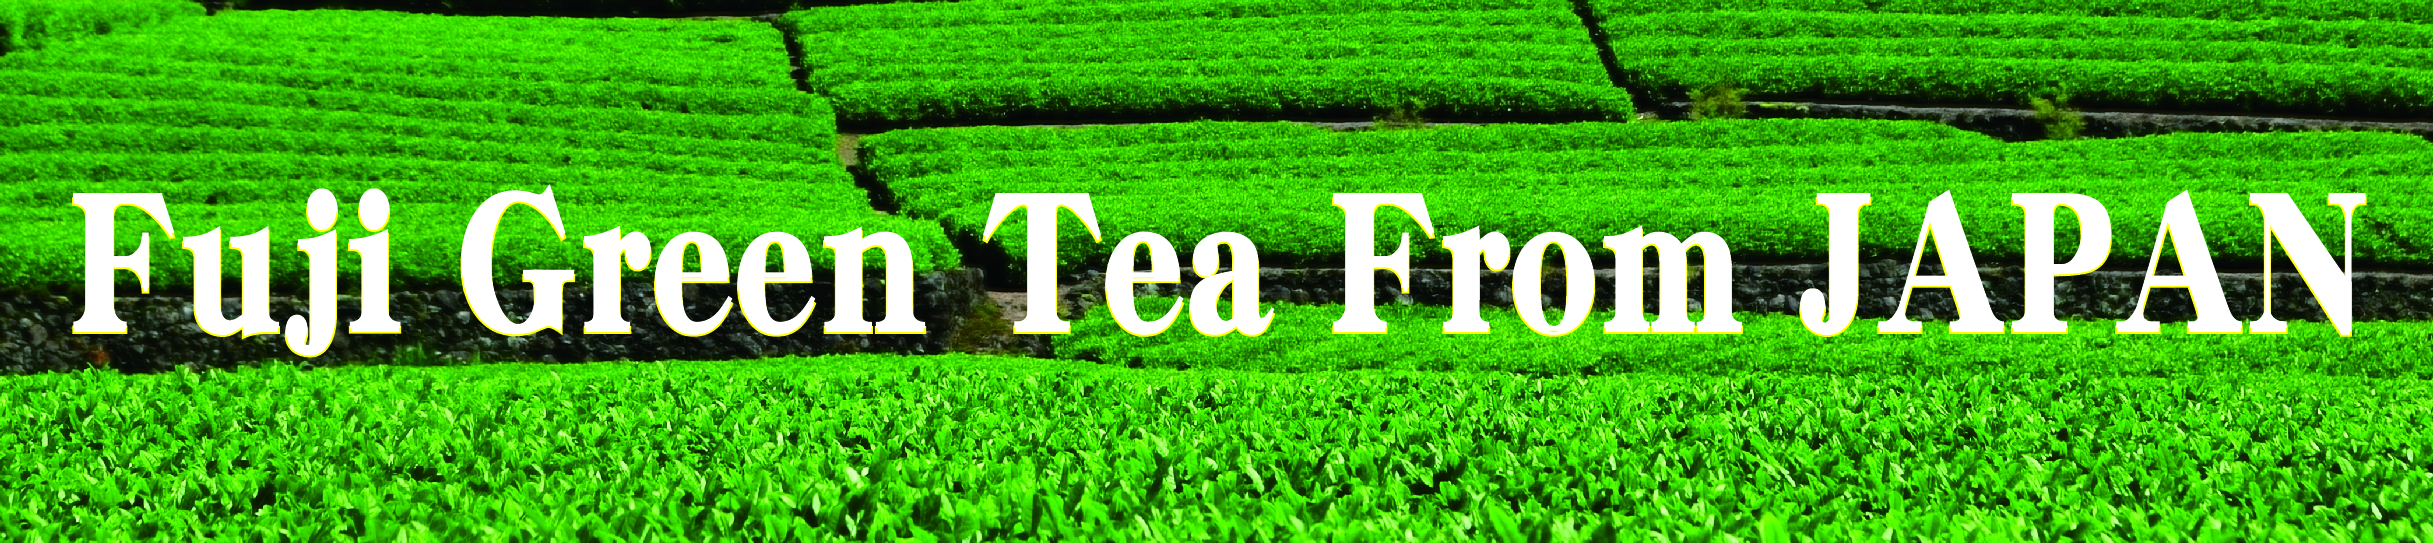 Fuji Green Tea From Japan